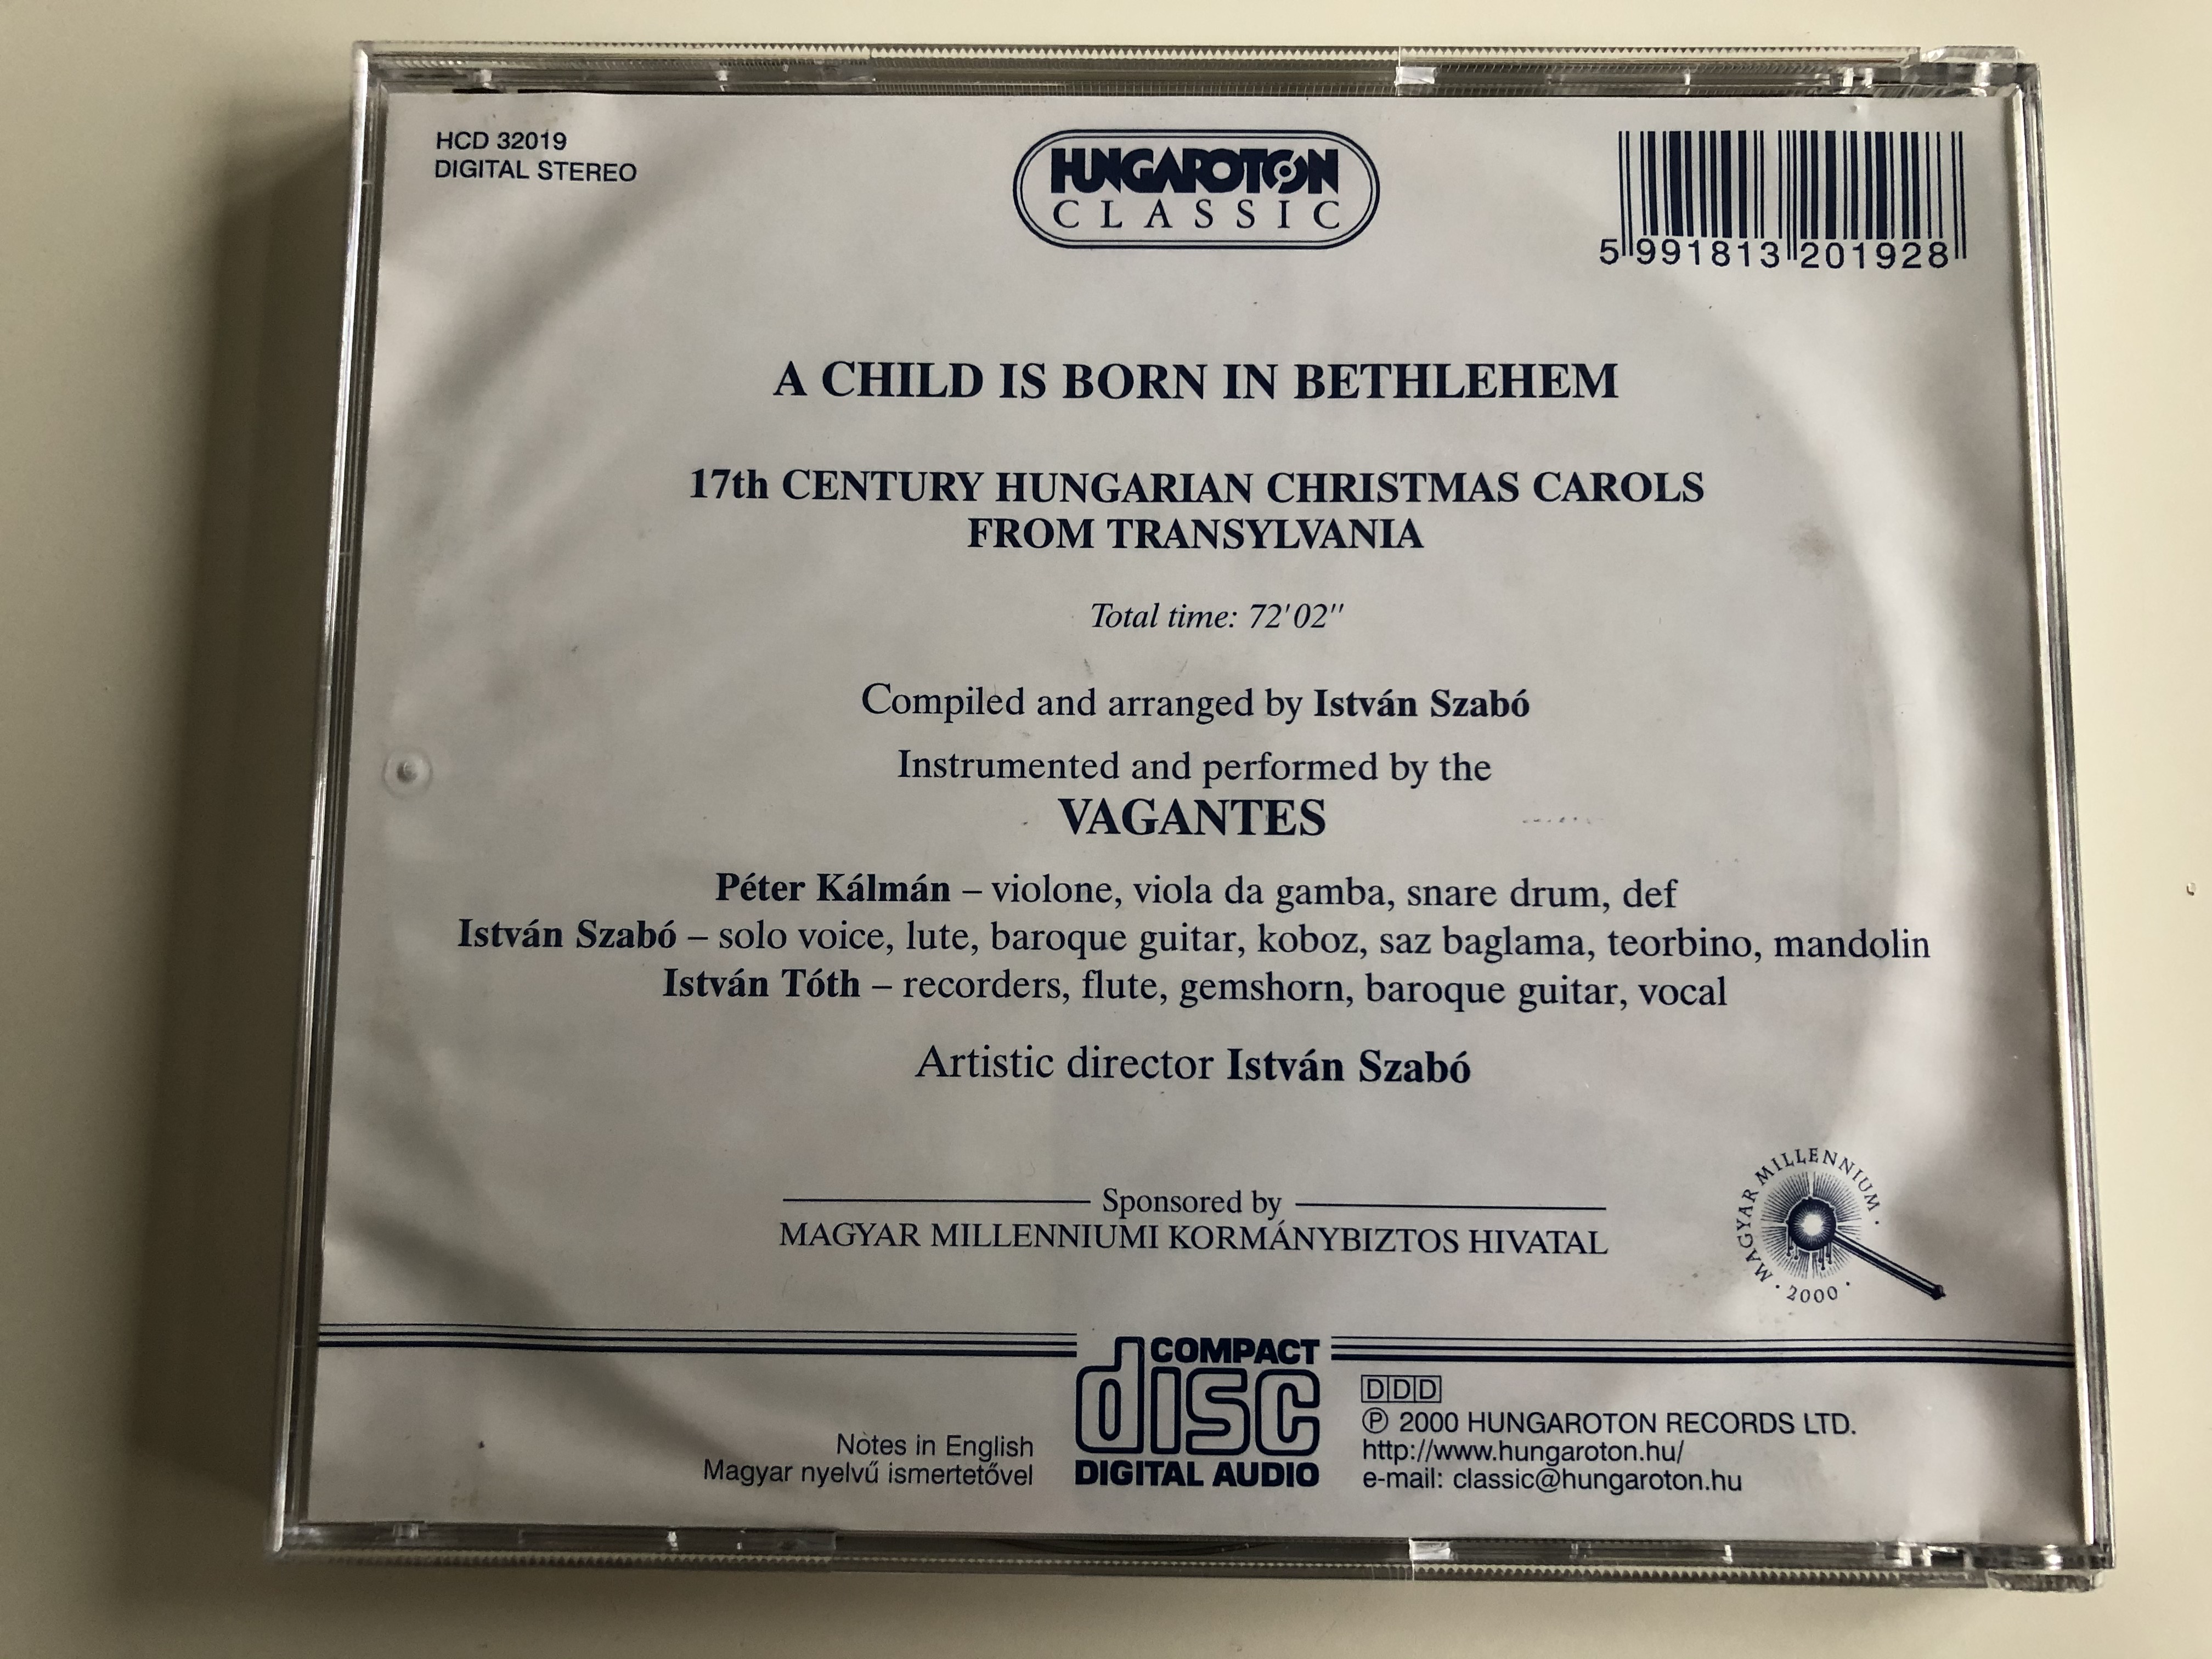 gyermek-sz-let-k-betlehemben-17th-century-hungarian-christmas-carols-from-transylvania-hungaroton-classic-audio-cd-2000-stereo-hcd-32019-8-.jpg